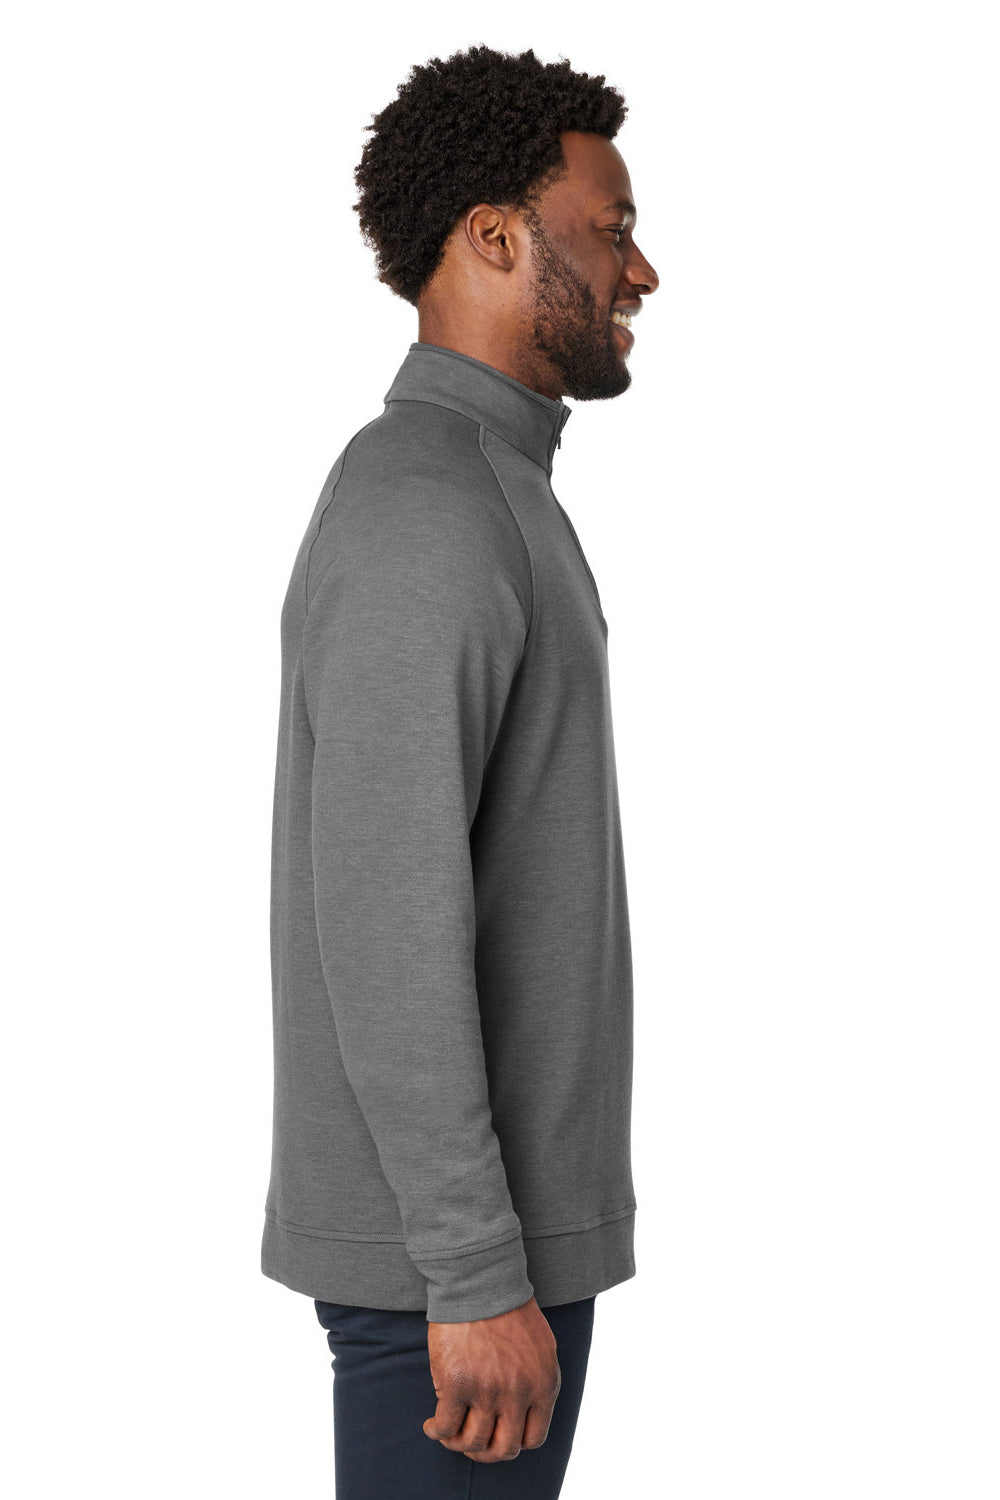 Devon & Jones DG481 Mens New Classics Charleston 1/4 Zip Sweatshirt Graphite Grey Melange Side